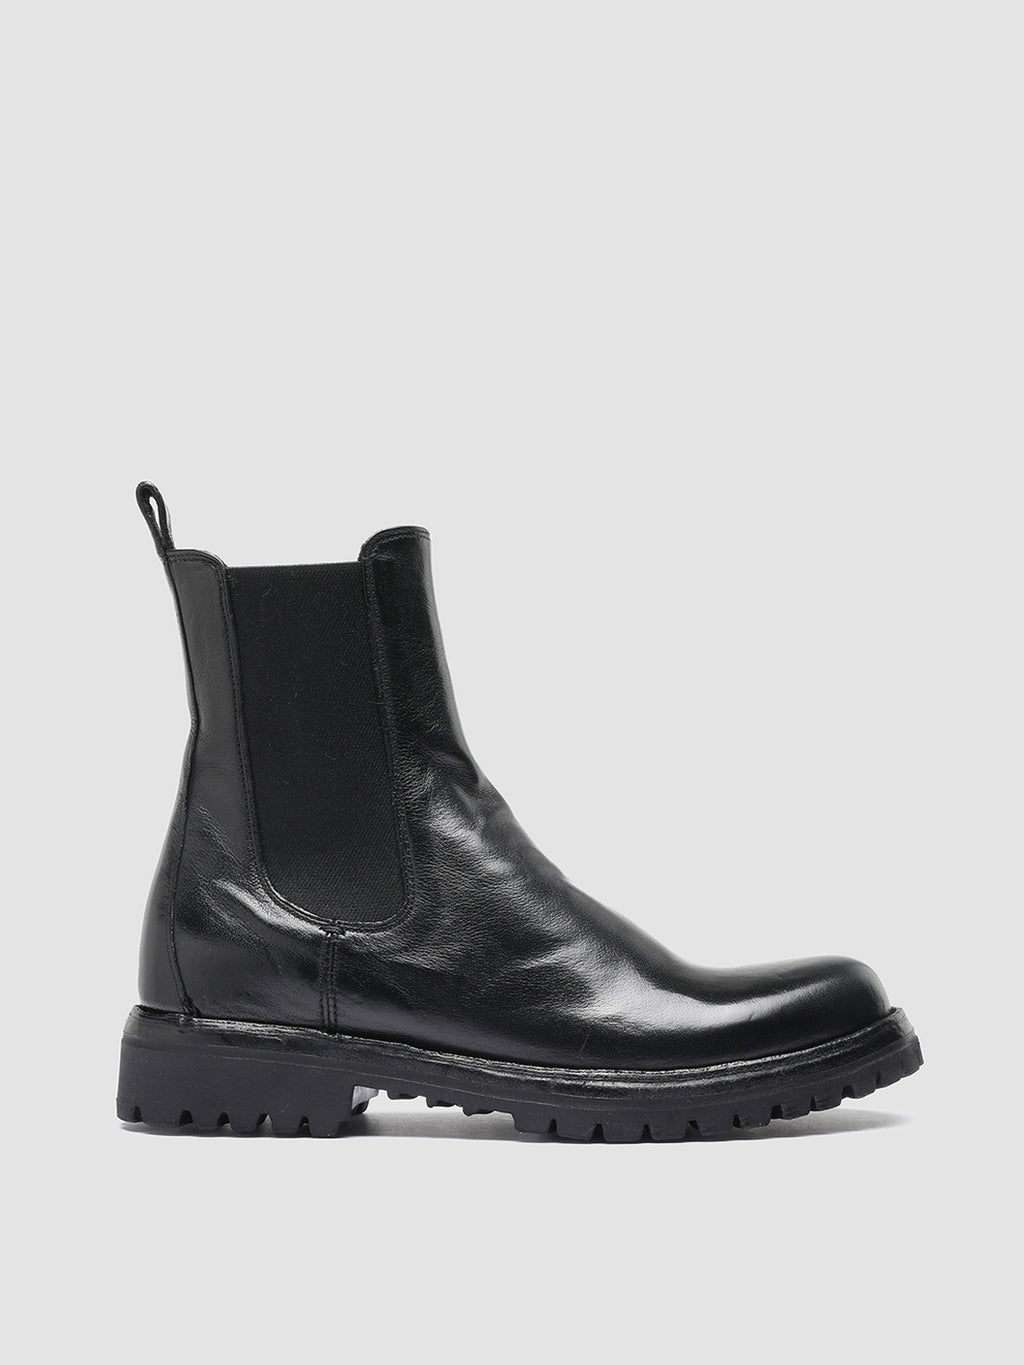 LORAINE 004 Nero - Black Leather Chelsea Boots Women Officine Creative - 1